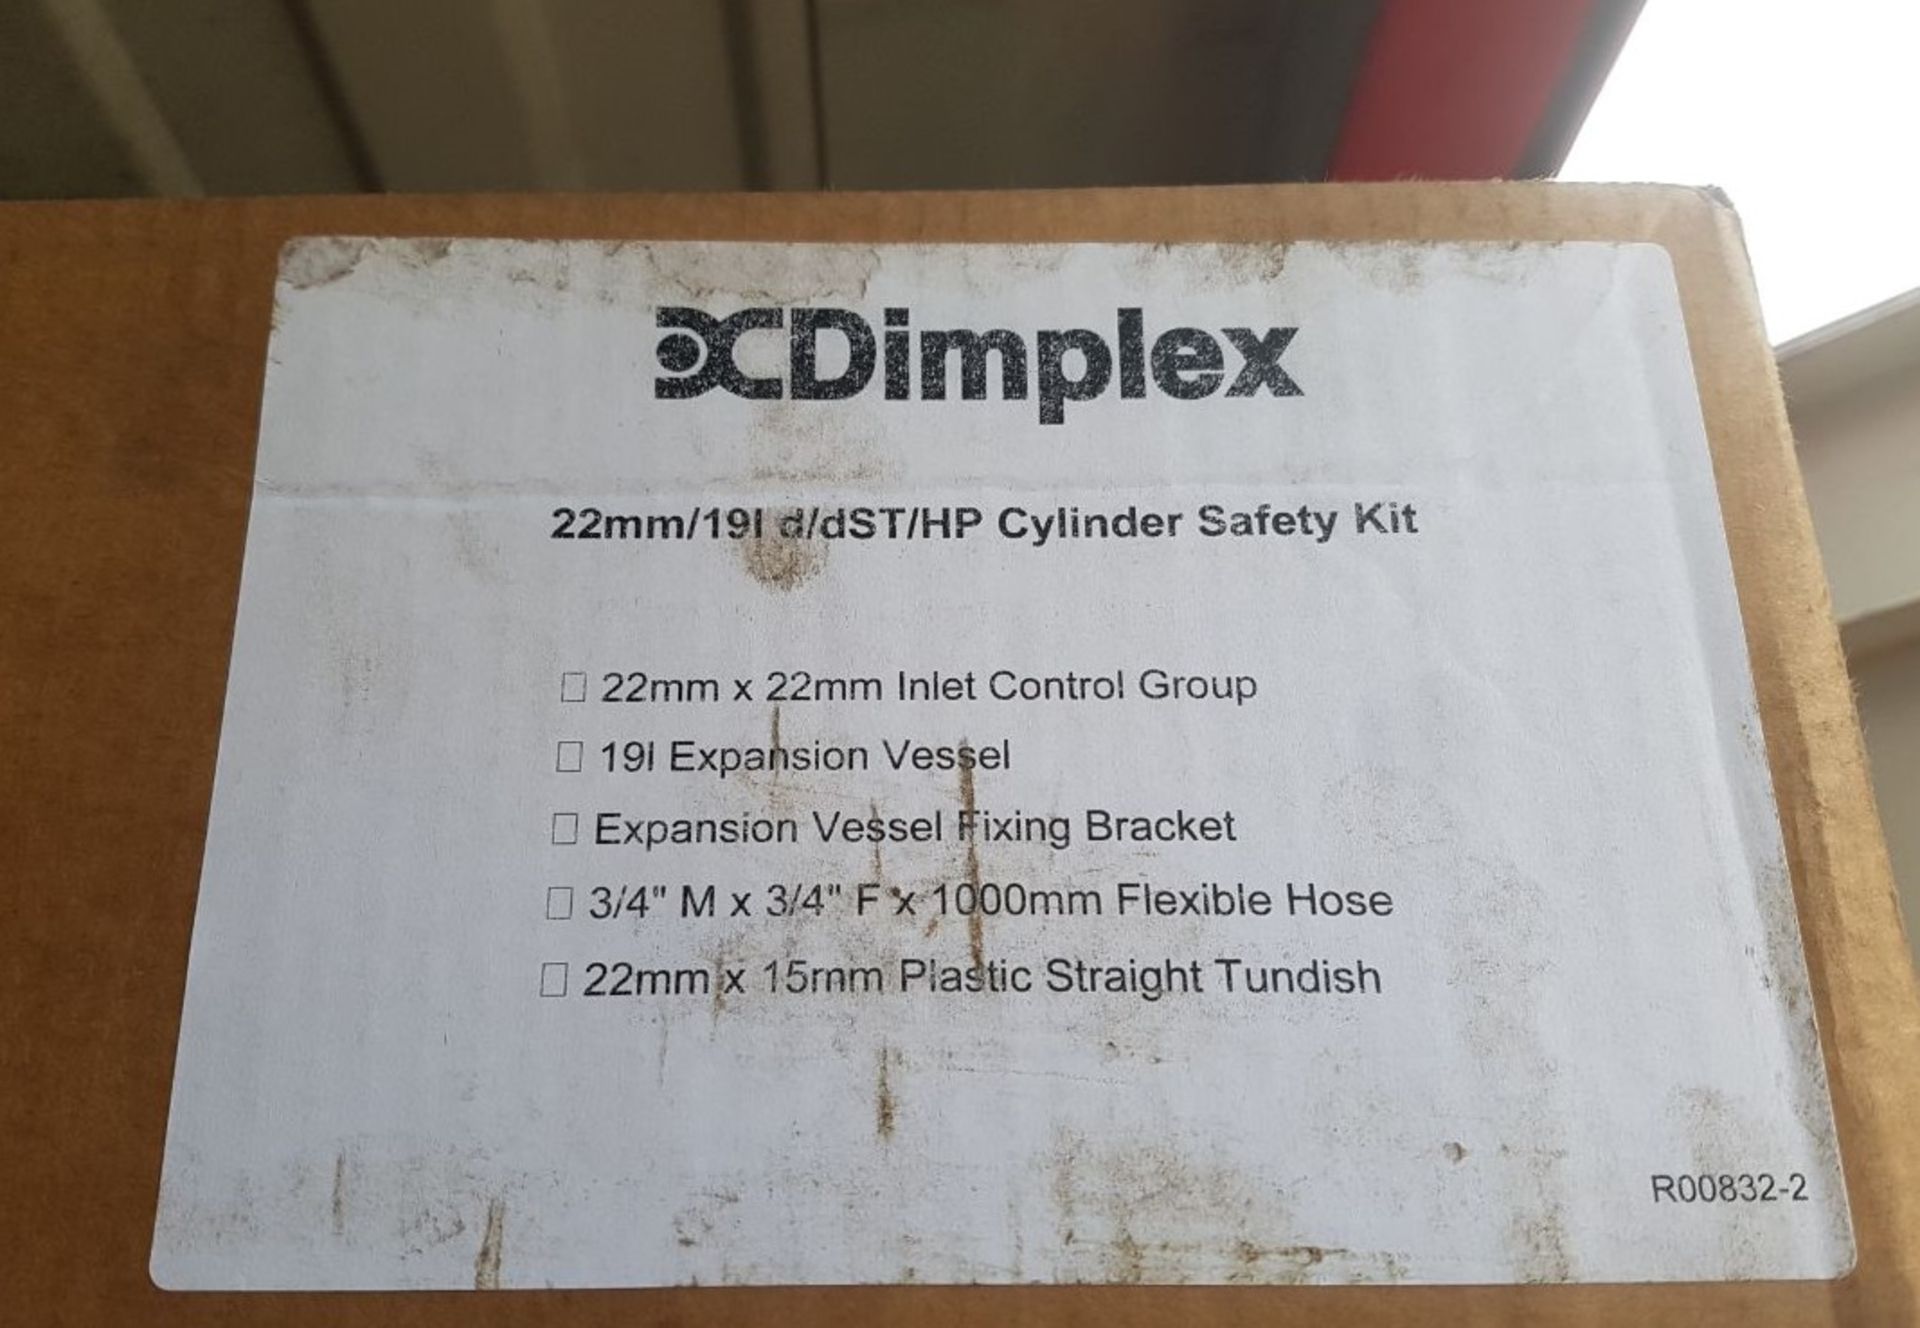 Dimplex EDL270UK-630 - Image 2 of 4